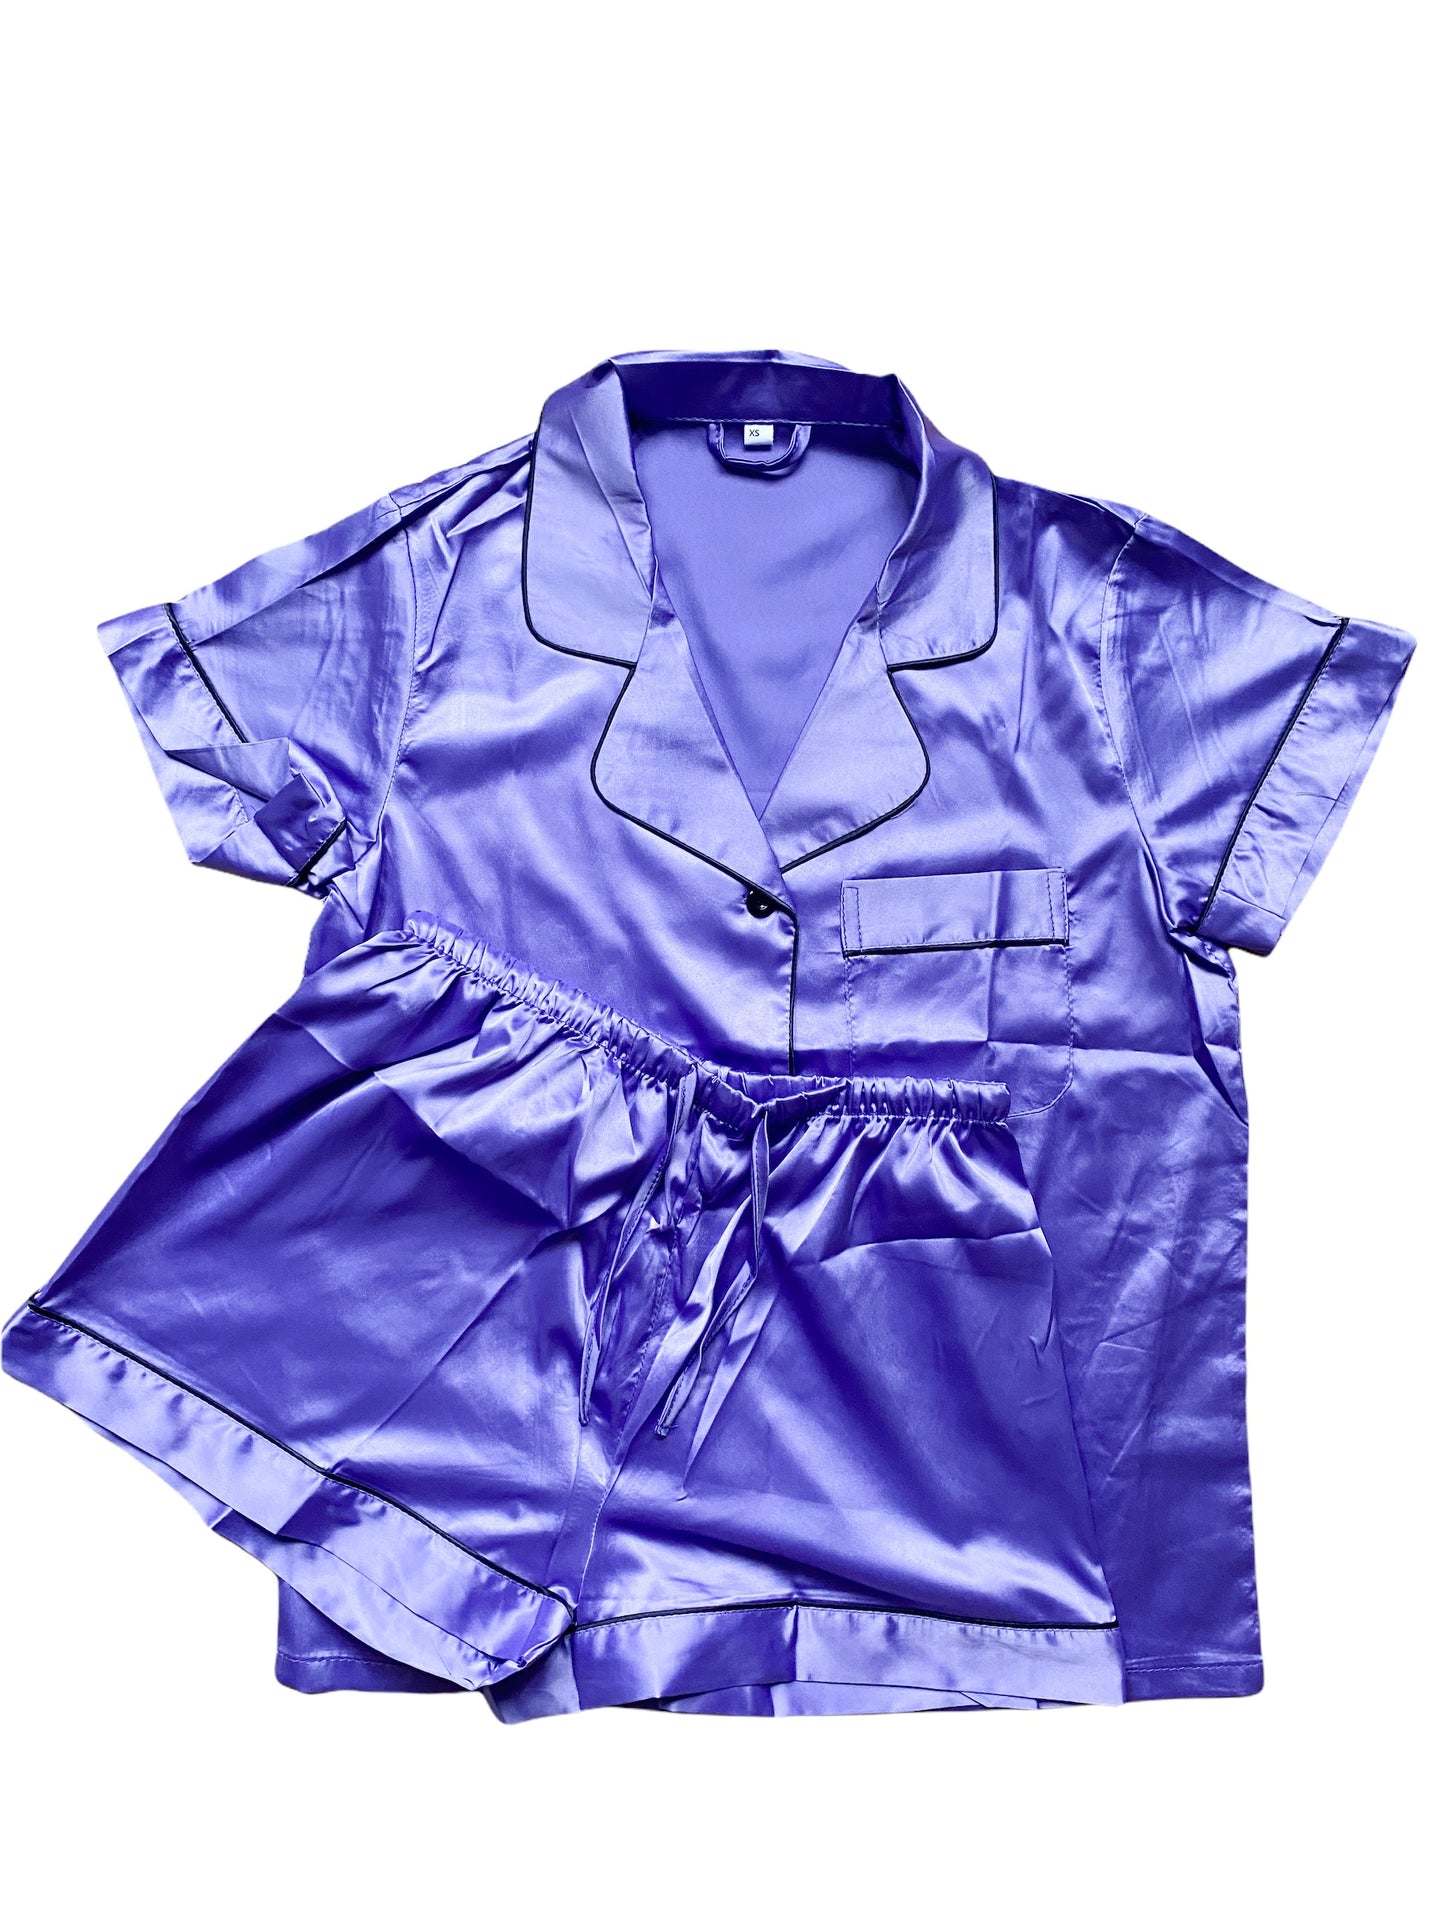 Satin Personalised Pyjama Set - Lavender and Black